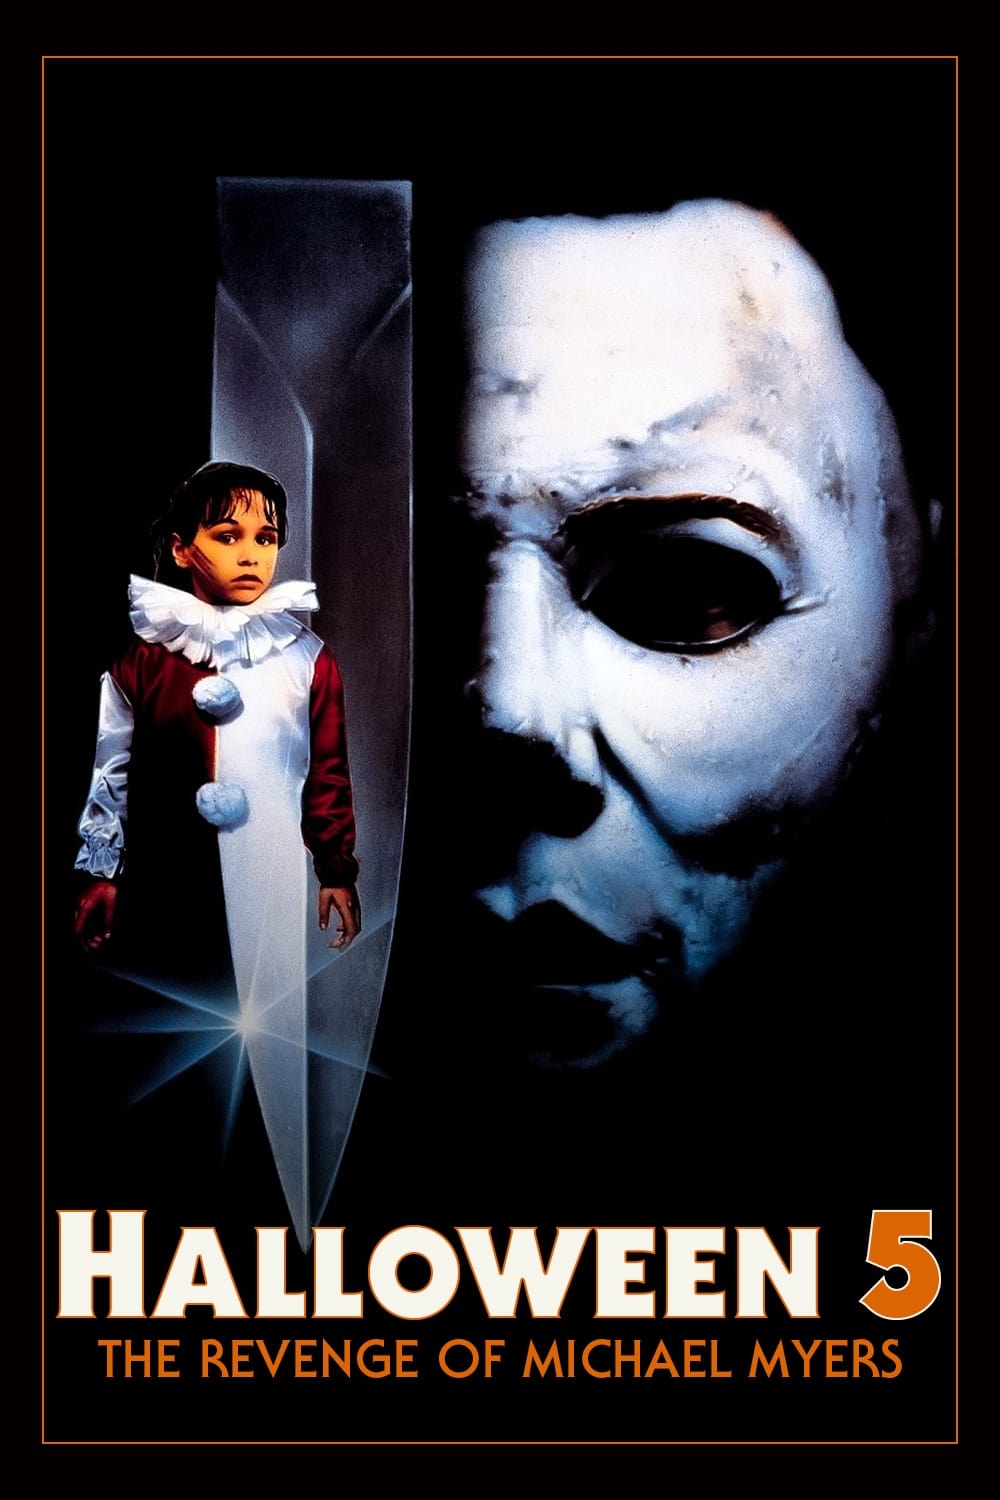 Banner Phim Halloween 5: Michael Myers Báo Thù (Halloween 5: The Revenge of Michael Myers)